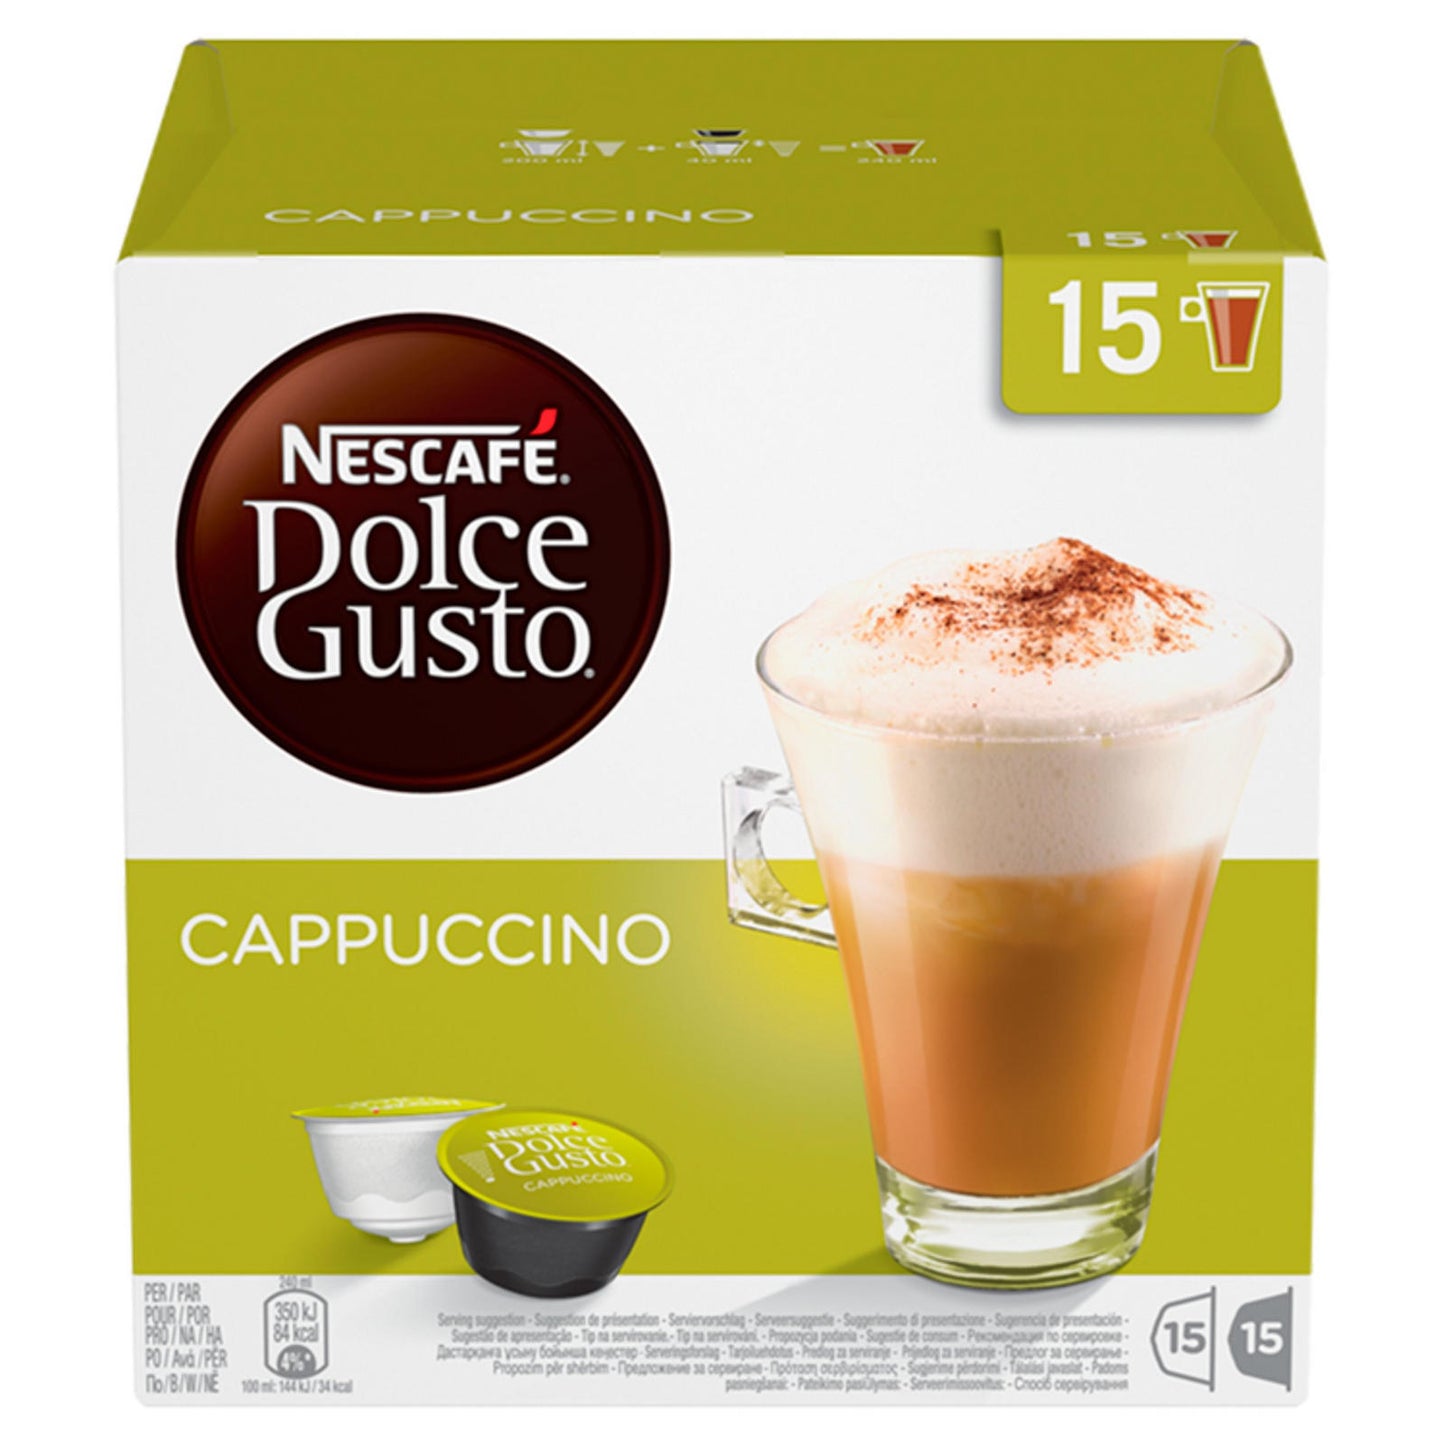 NESTLE - Dolce Gusto - Soluble - Cappuccino - Conf. 30